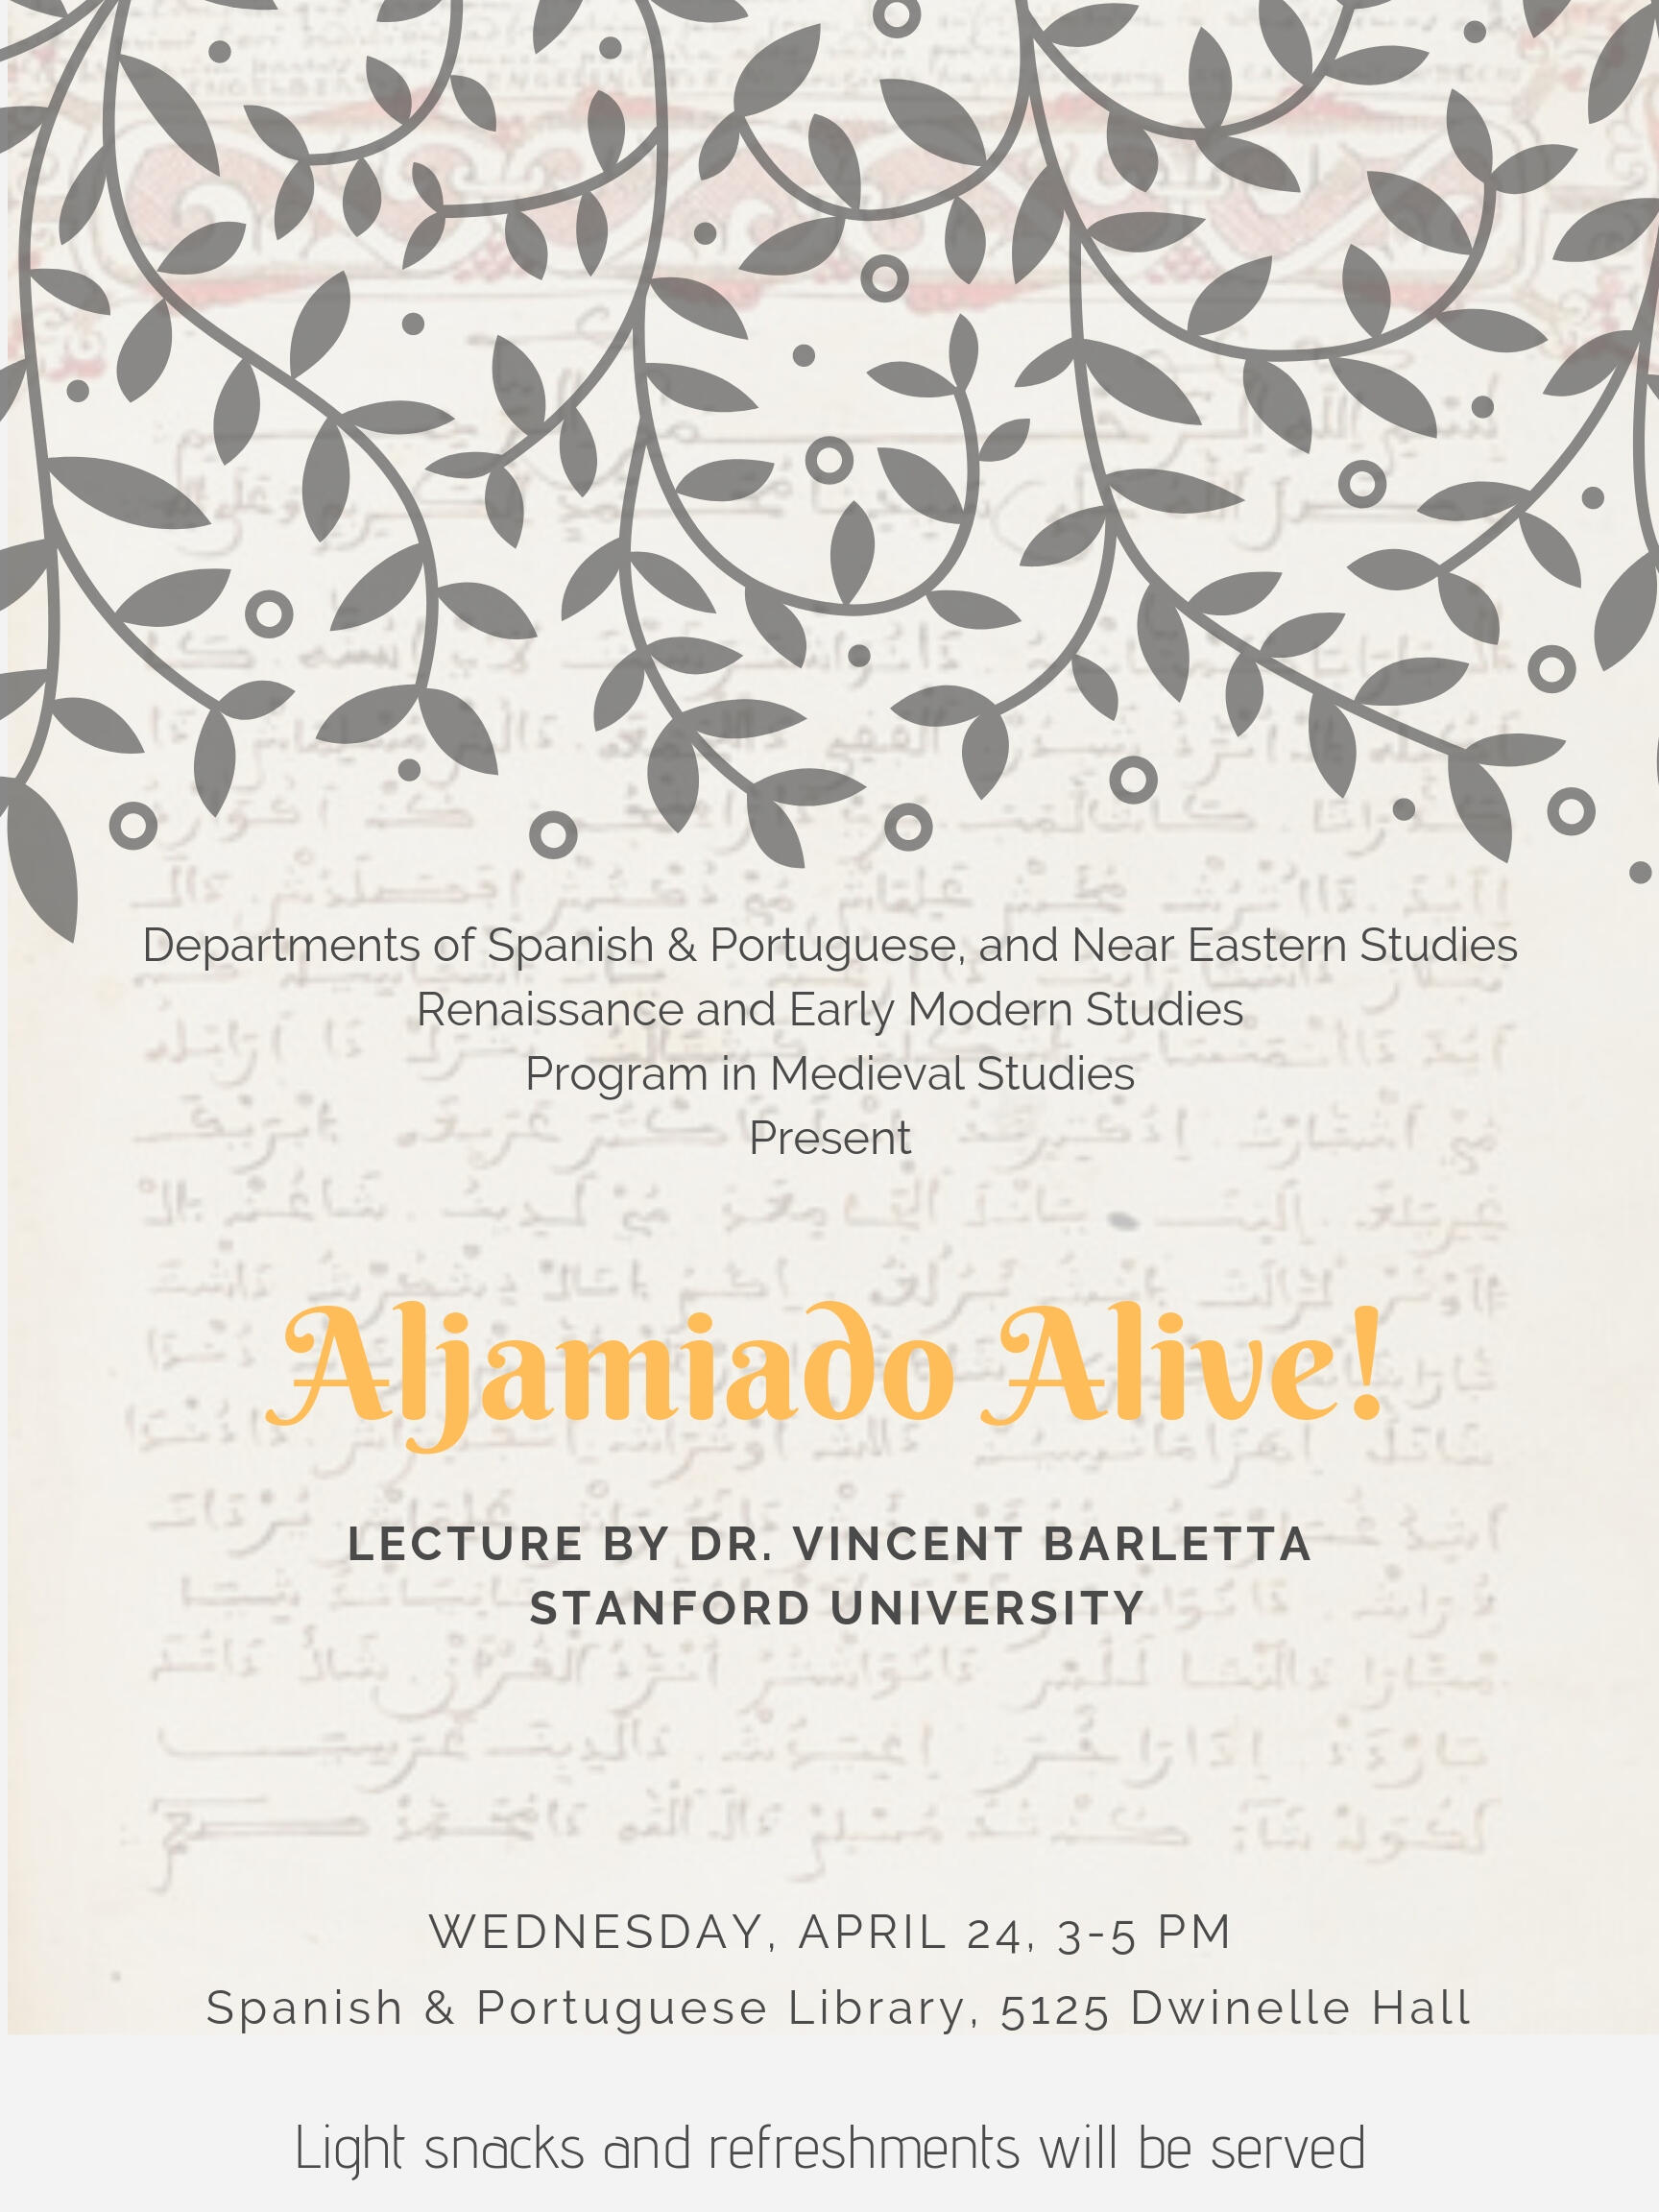 Aljamiado Alive! Lecture by Dr. Vincent Barletta, Stanford University